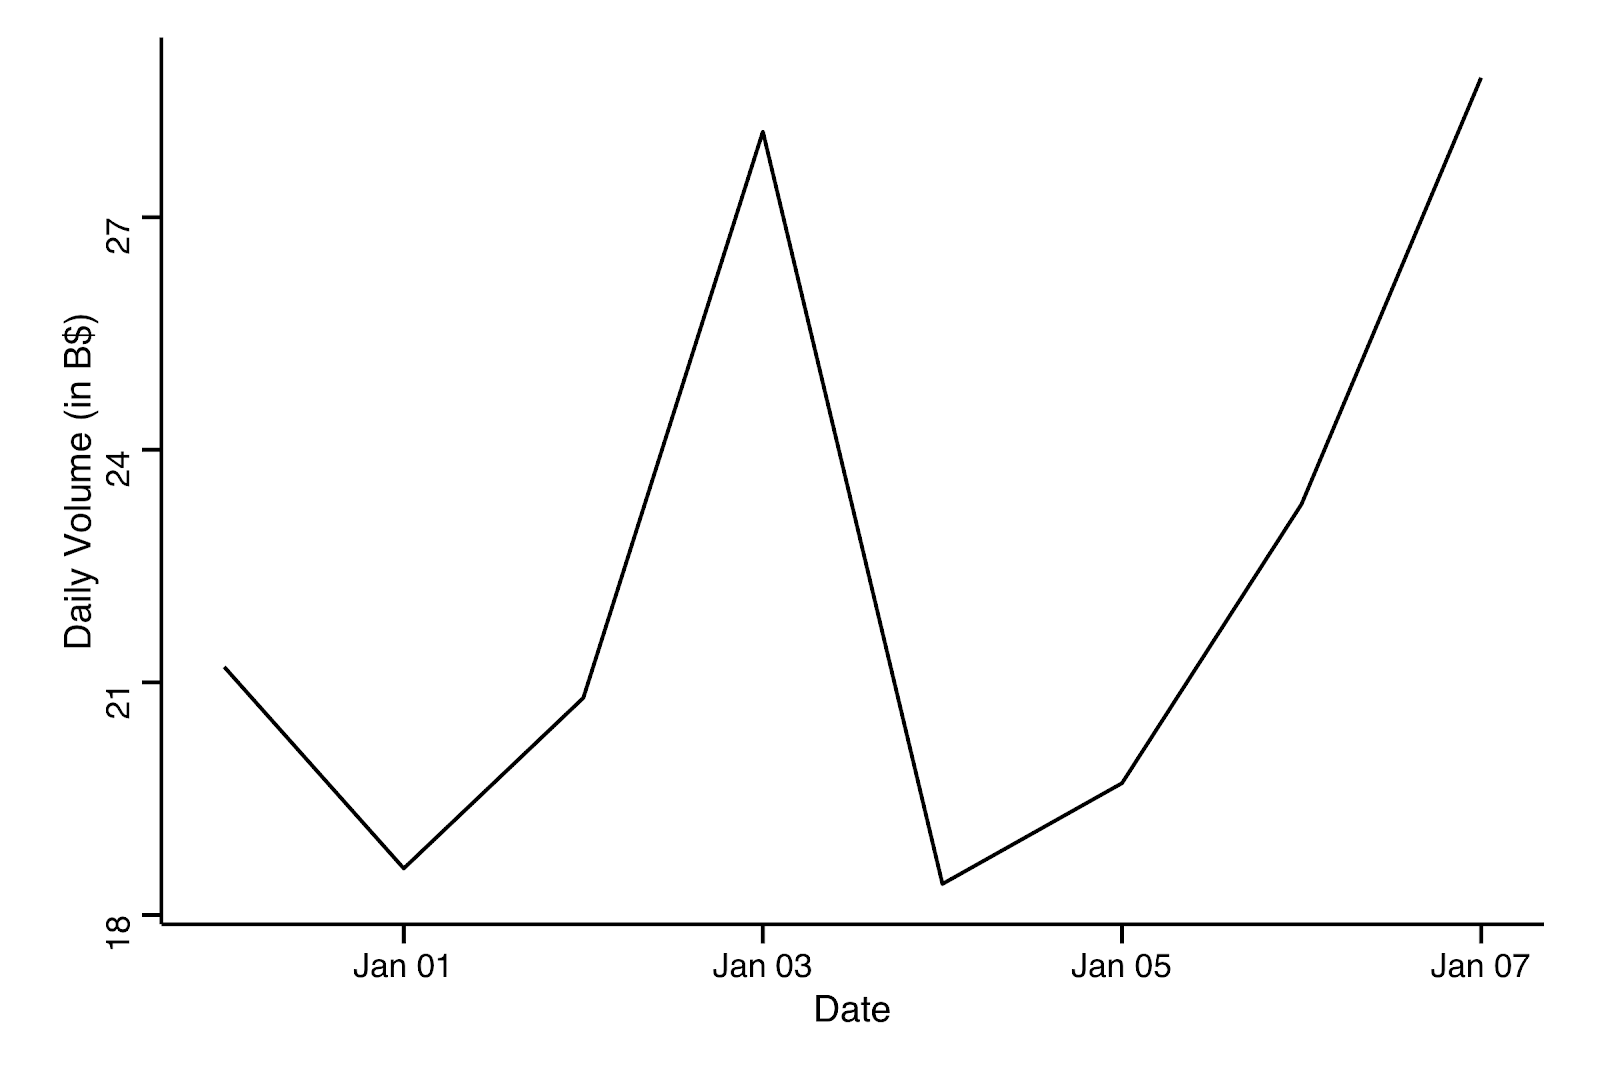 Figure 3: Bitcoin’s Daily Volume in the last 7 days. Data source: Coinmarketcap